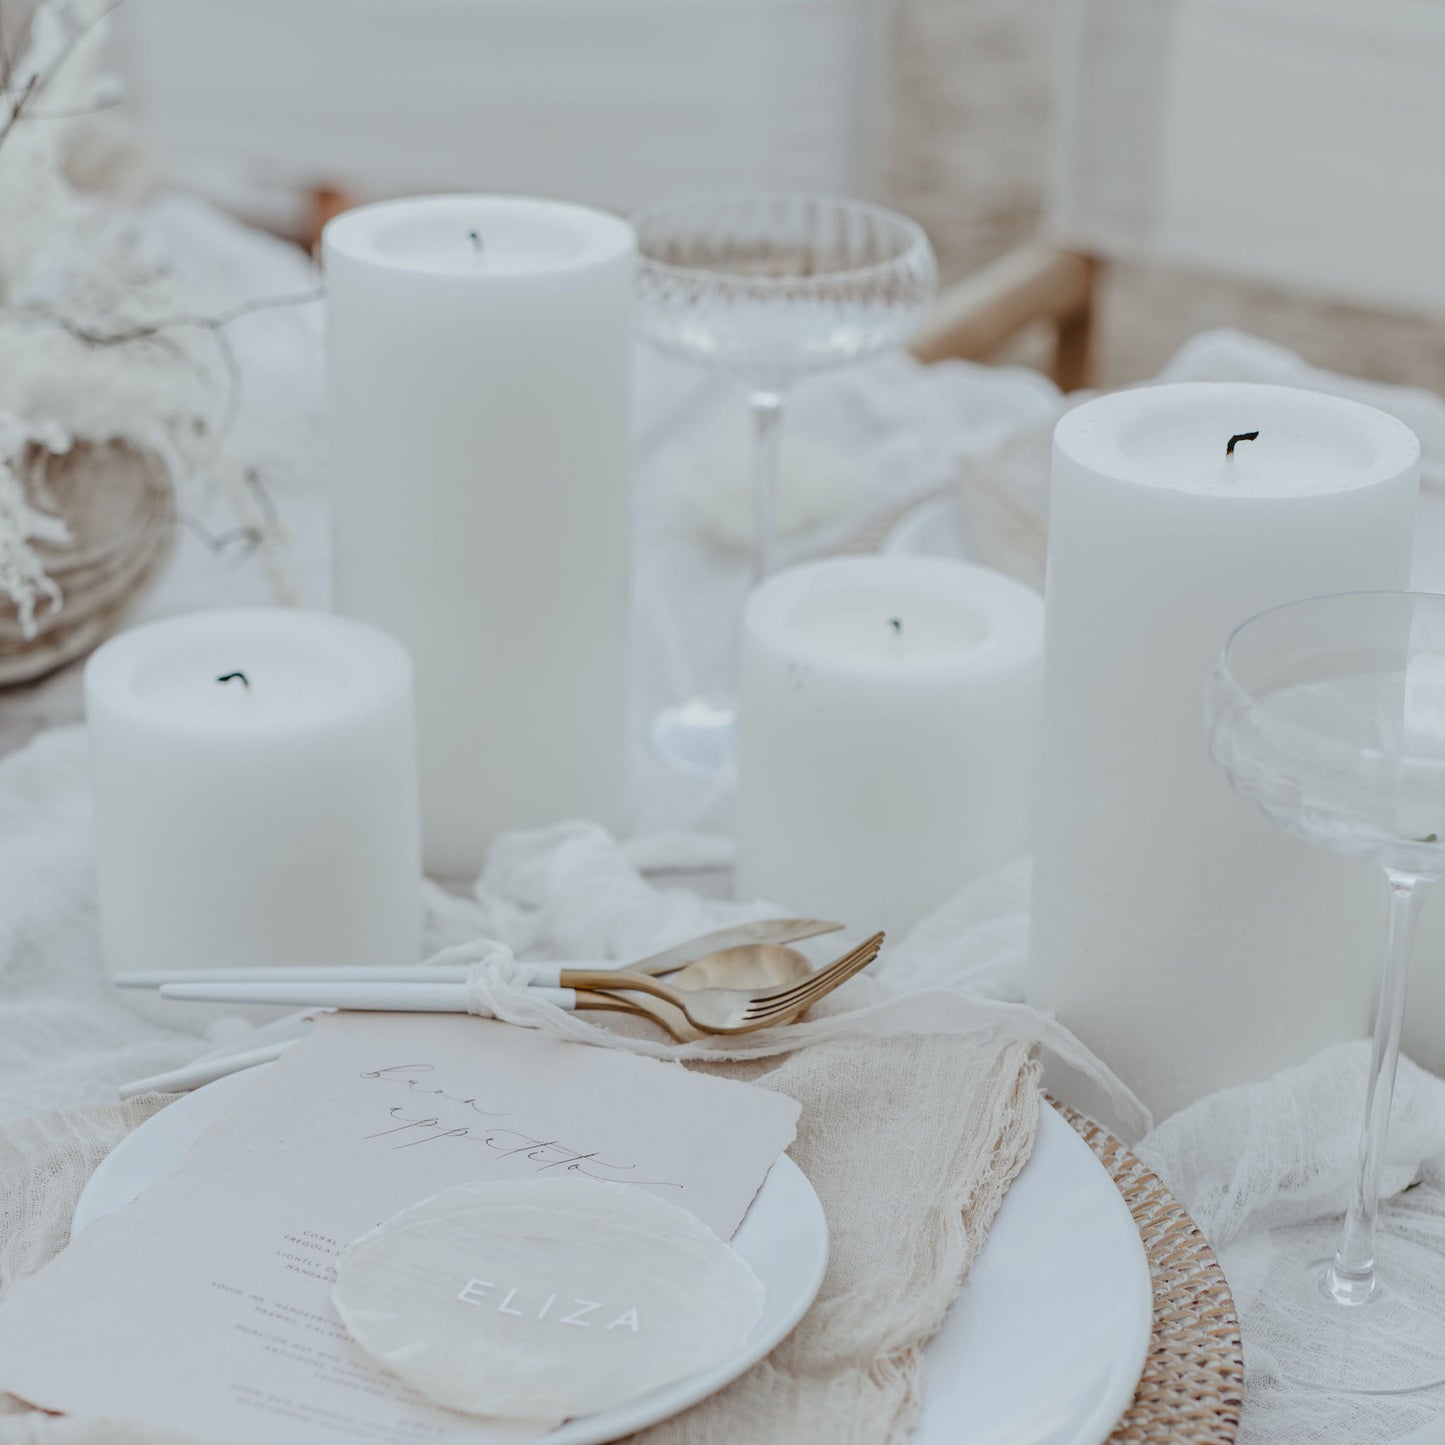 Textured white pillar candles